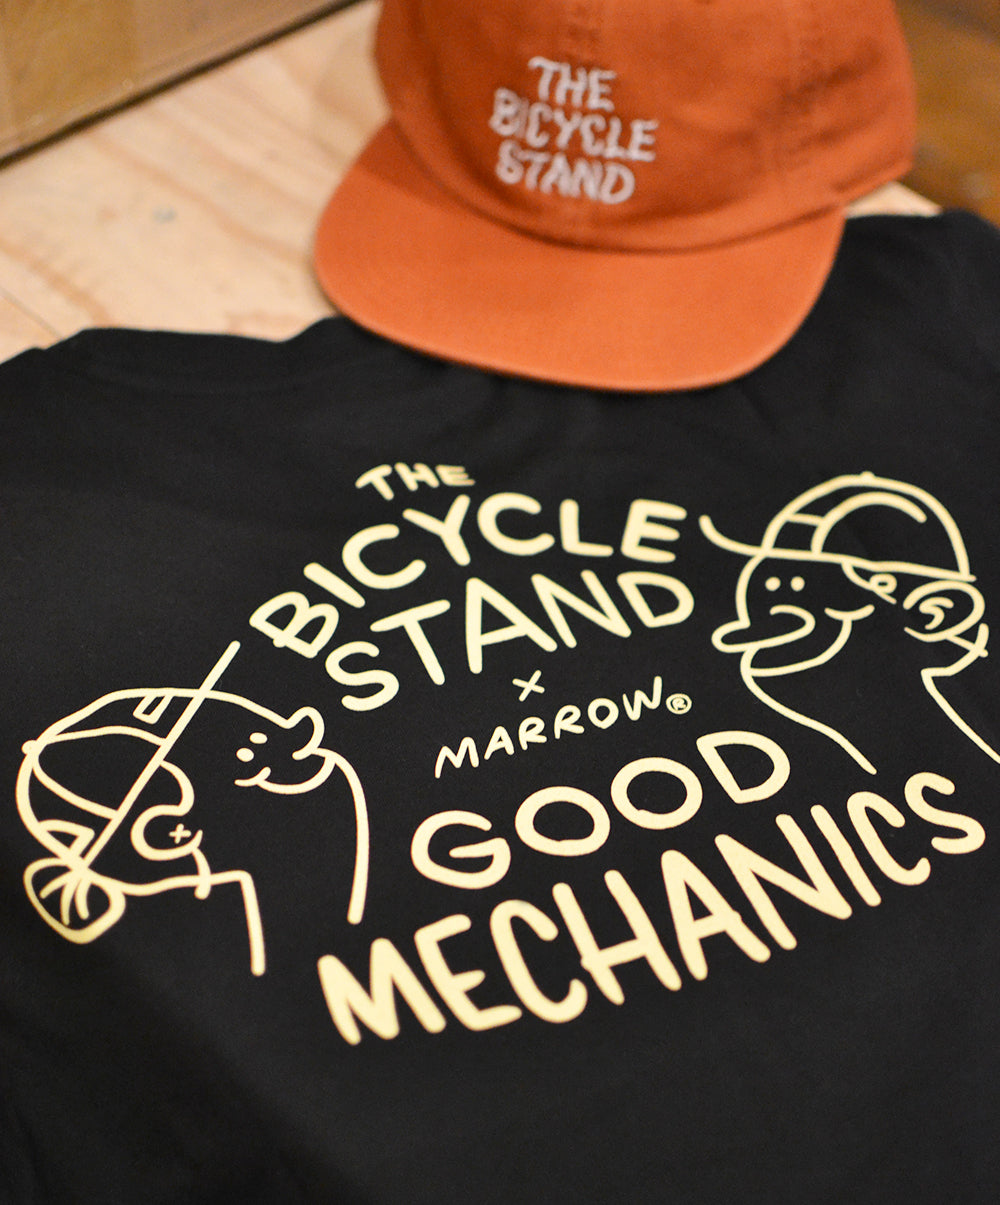 Bicycle Stand x Marrow® Good Mechanics Tee